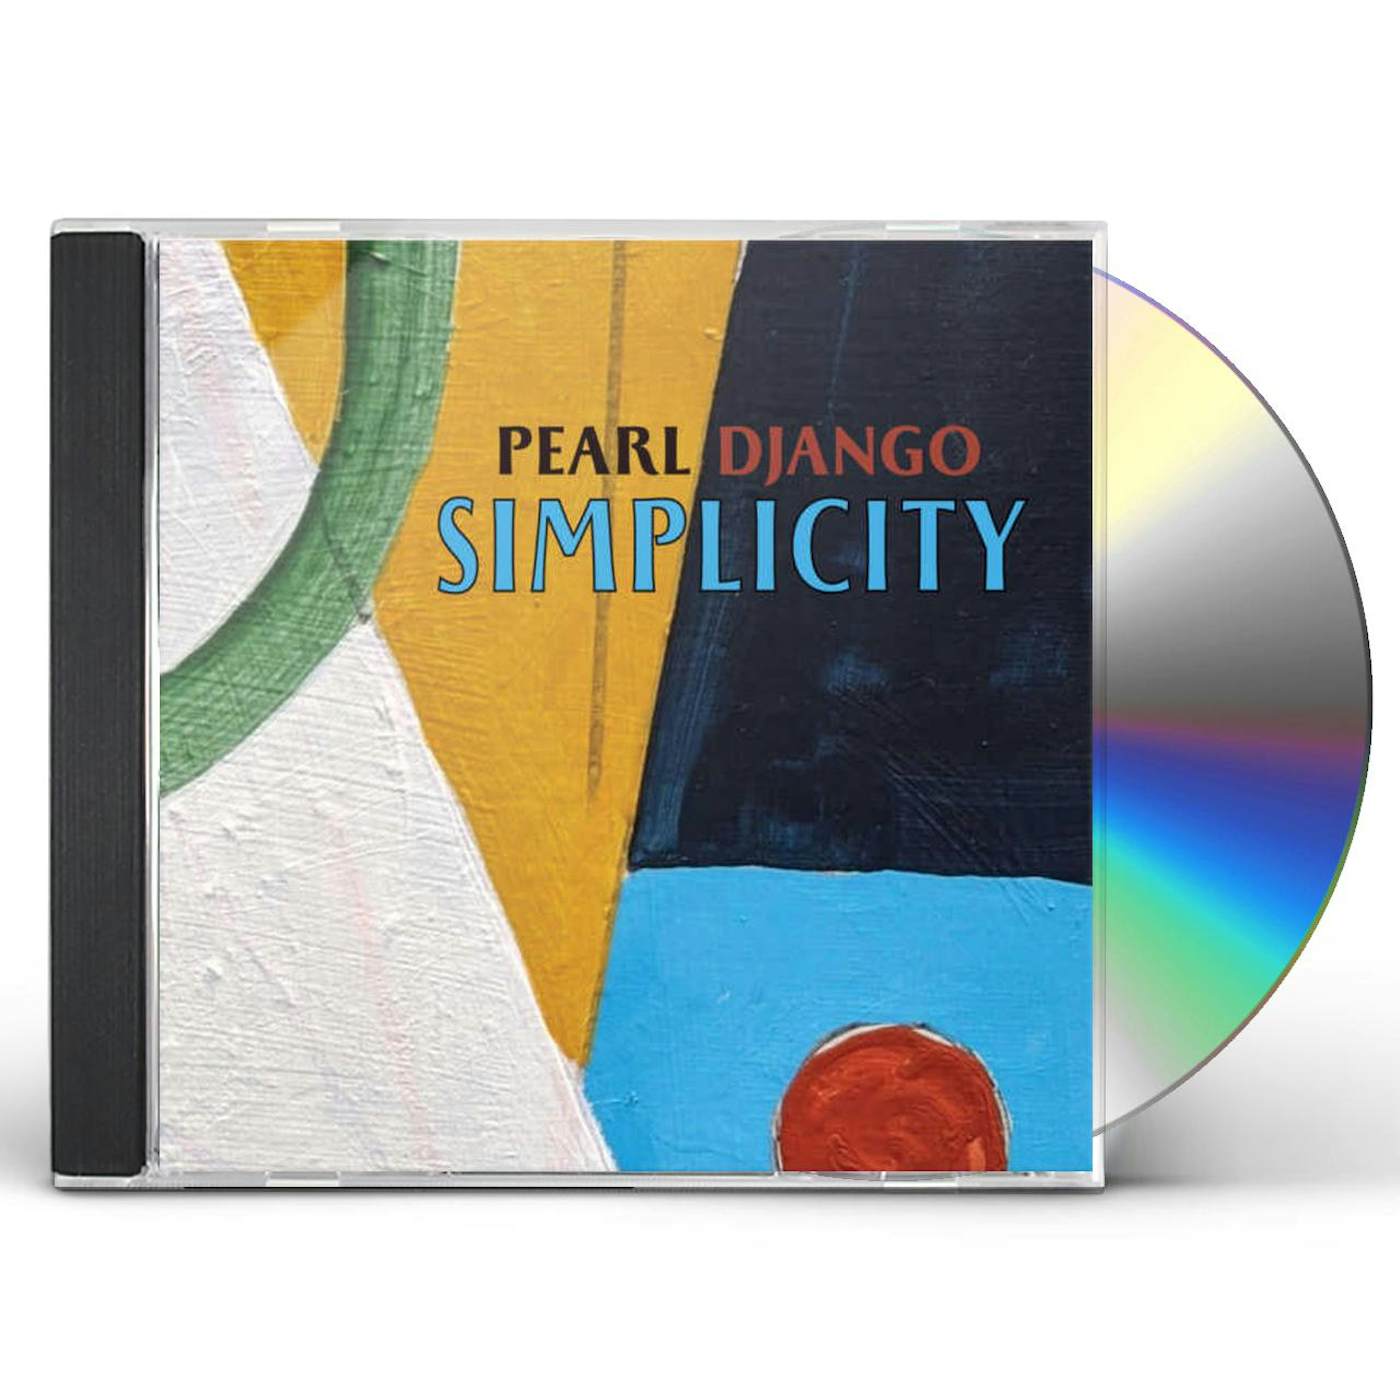 Pearl Django SIMPLICITY CD